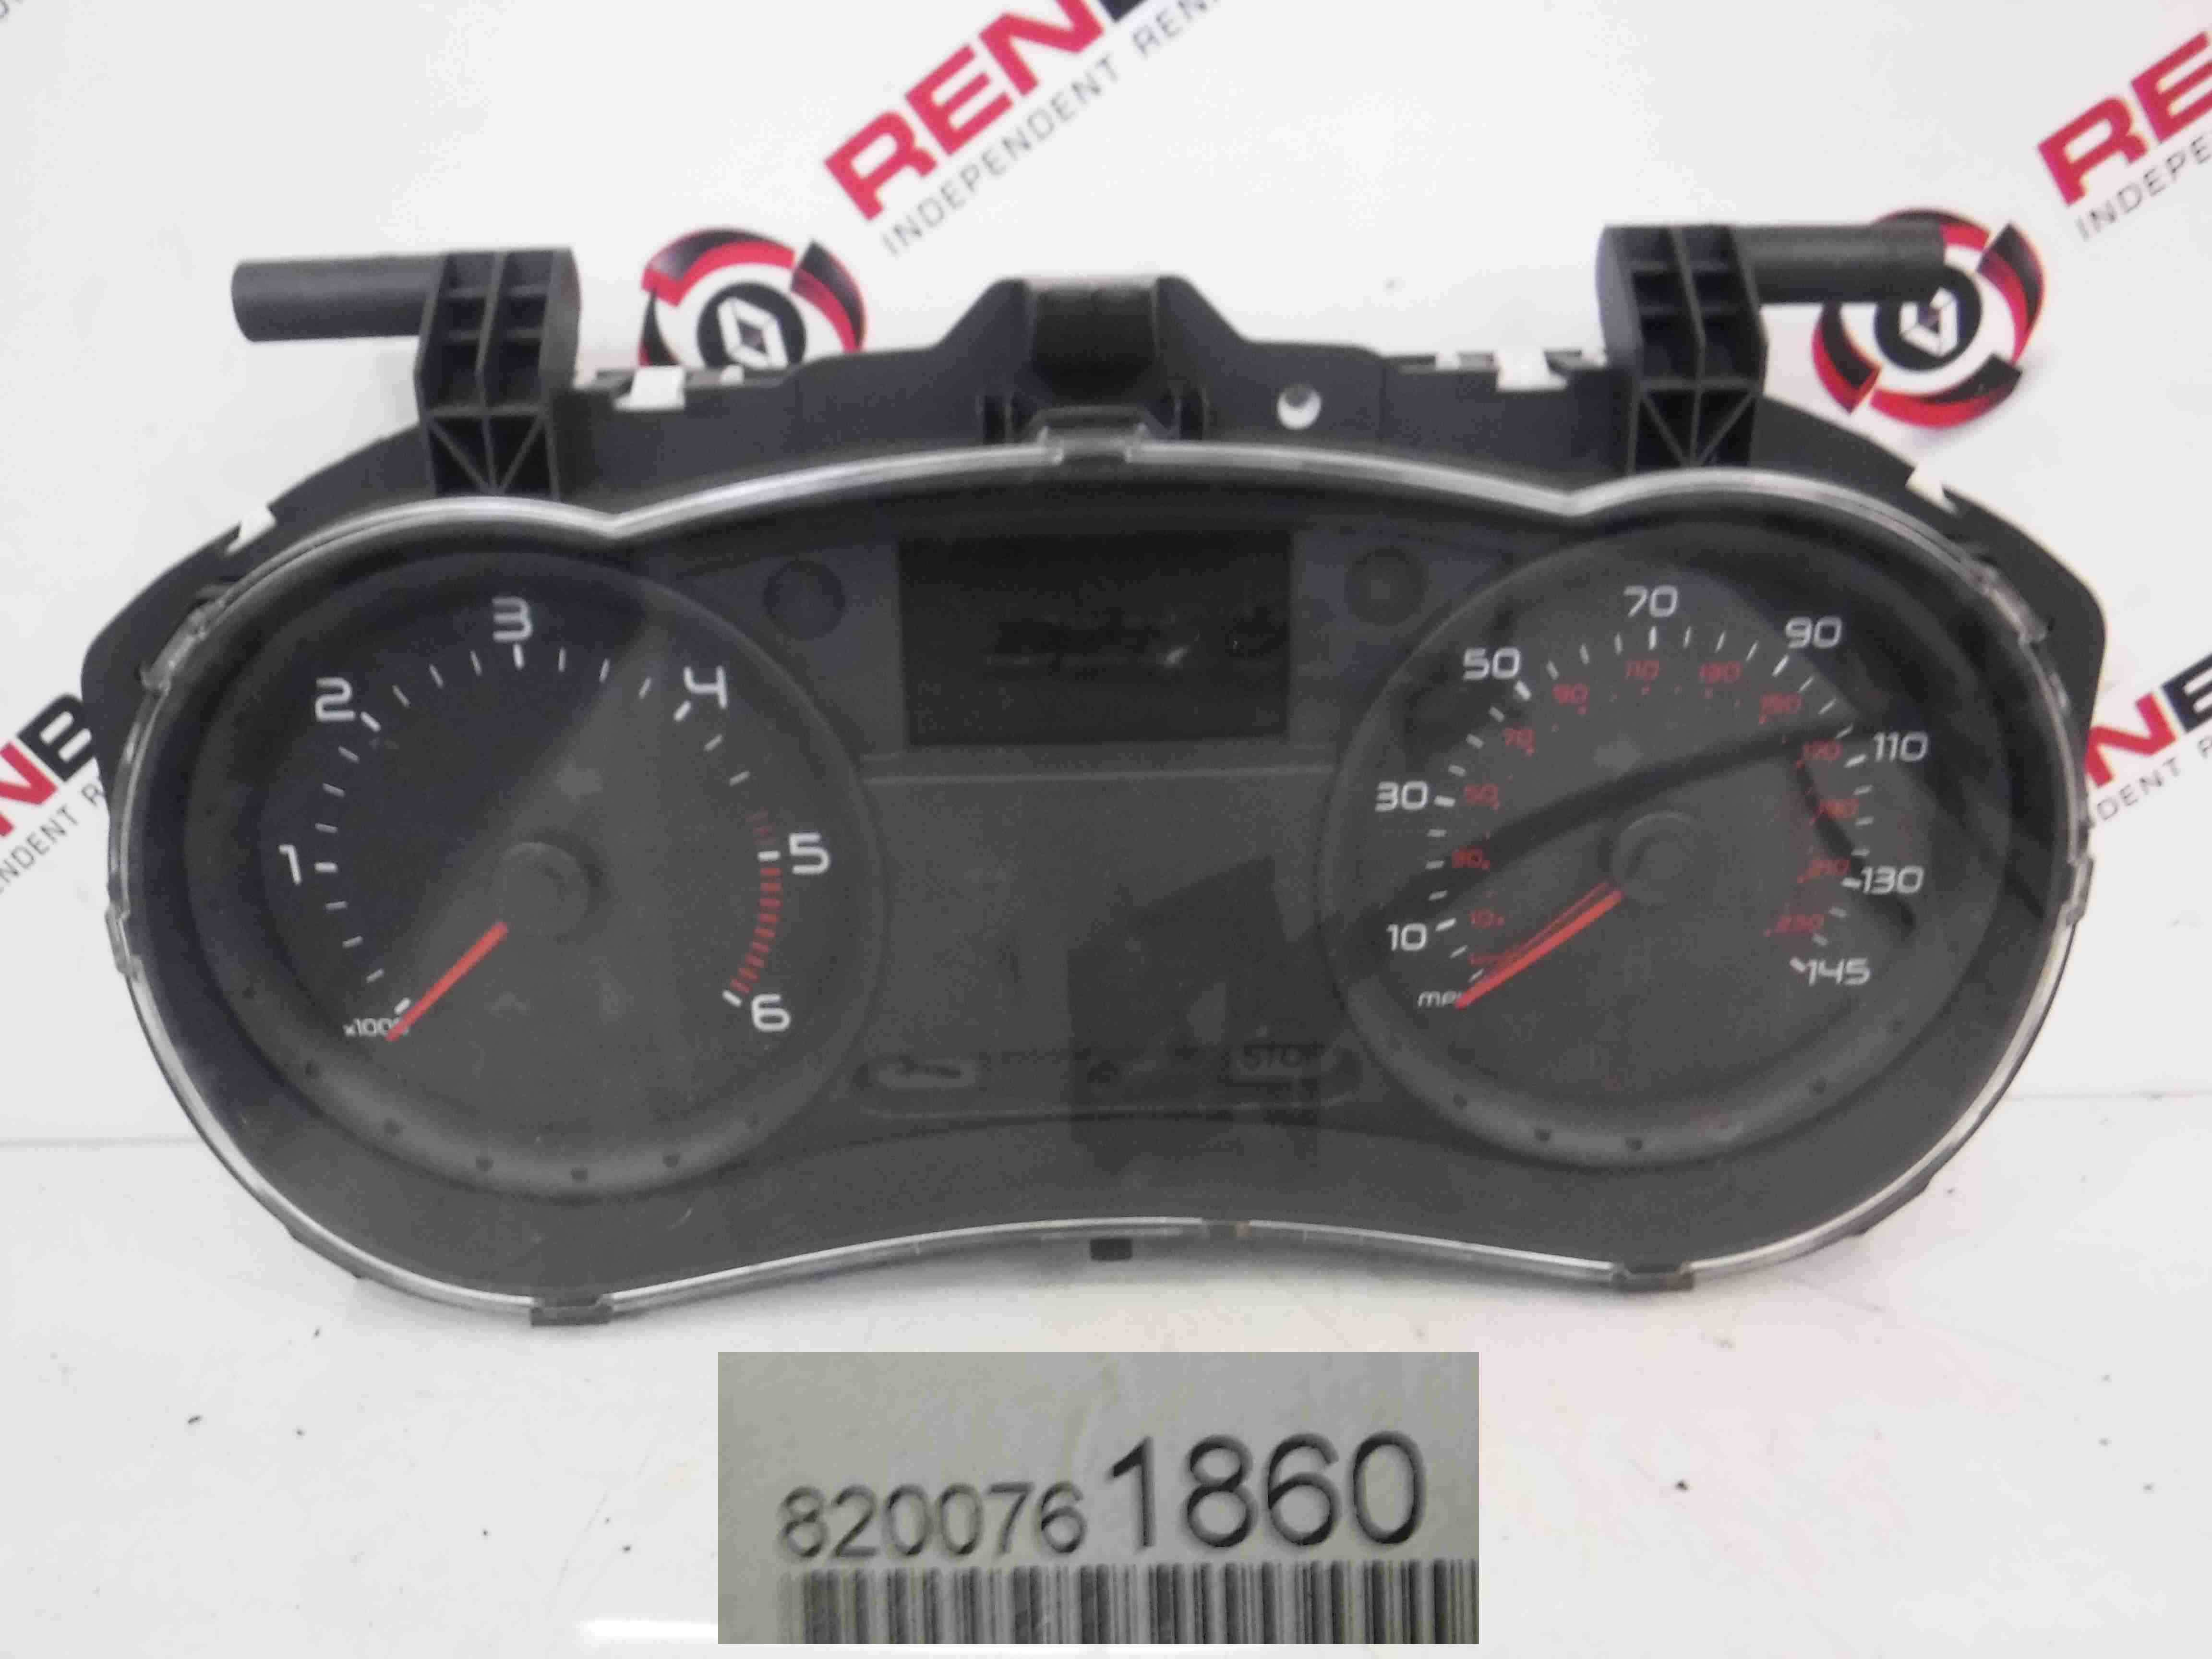 Renault Clio MK3 2005-2012 Instrument Panel Dials Gauges Clocks 100K 8200761860